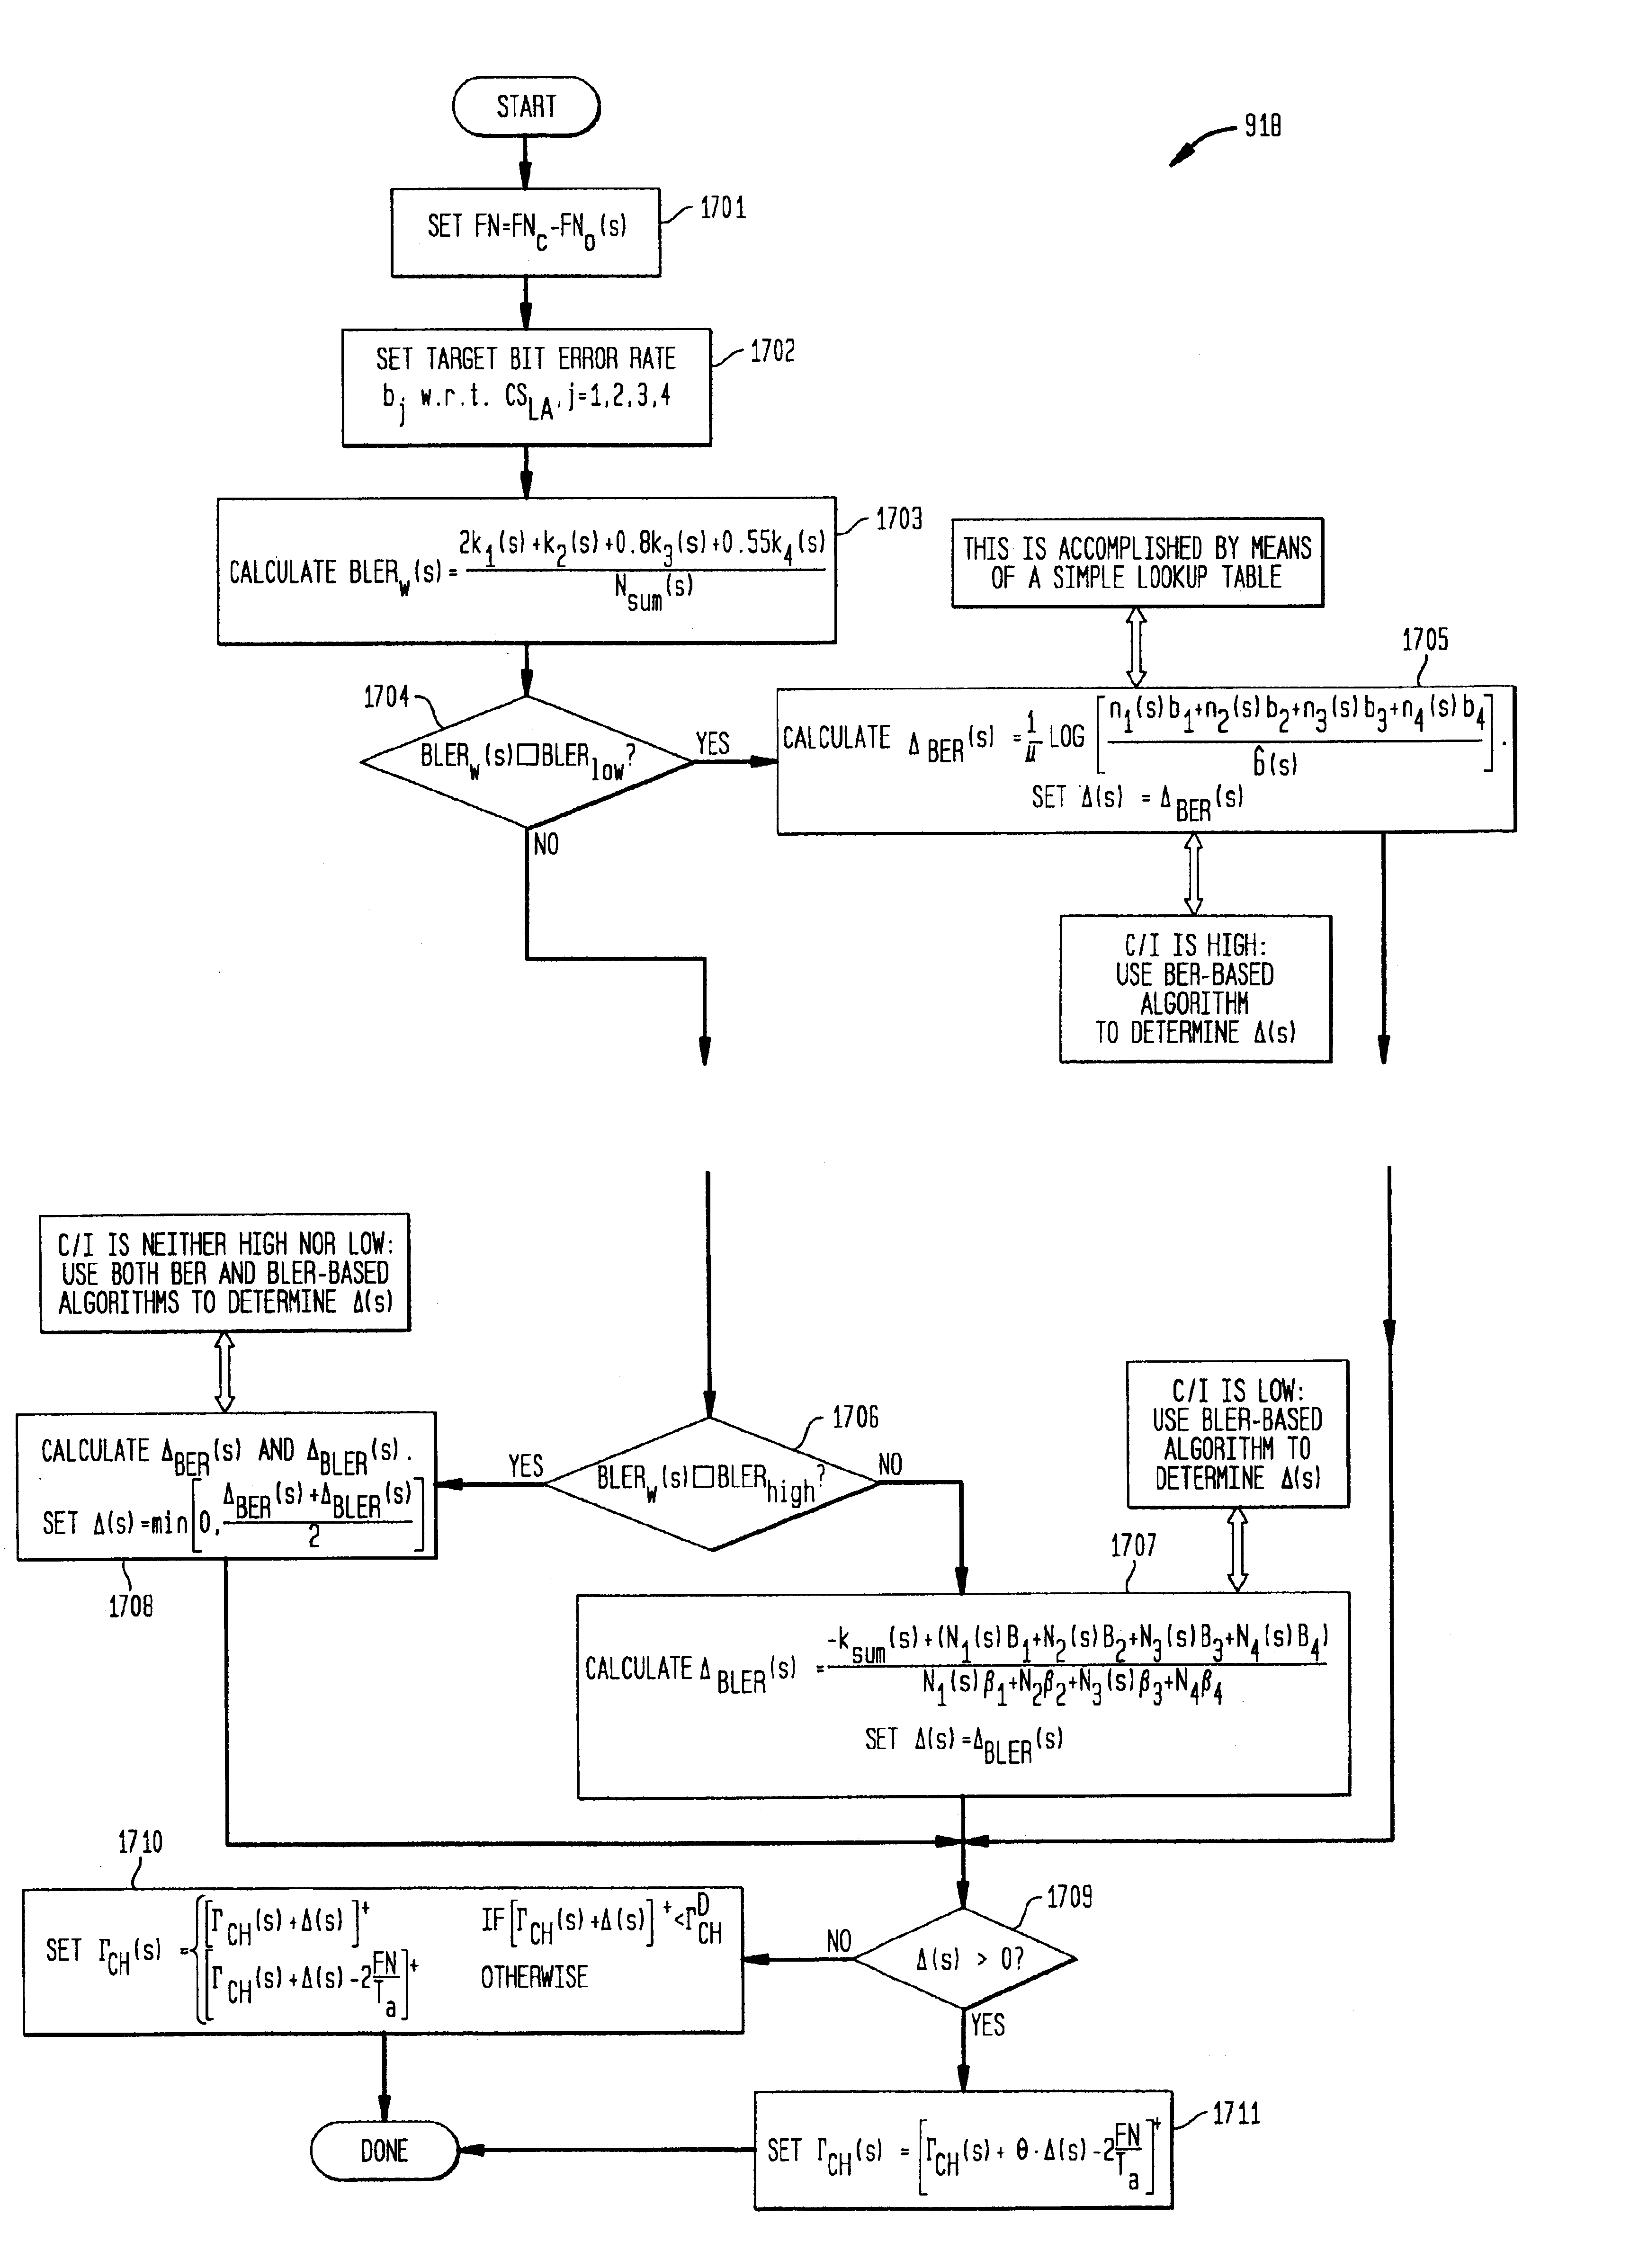 Uplink power control algorithm